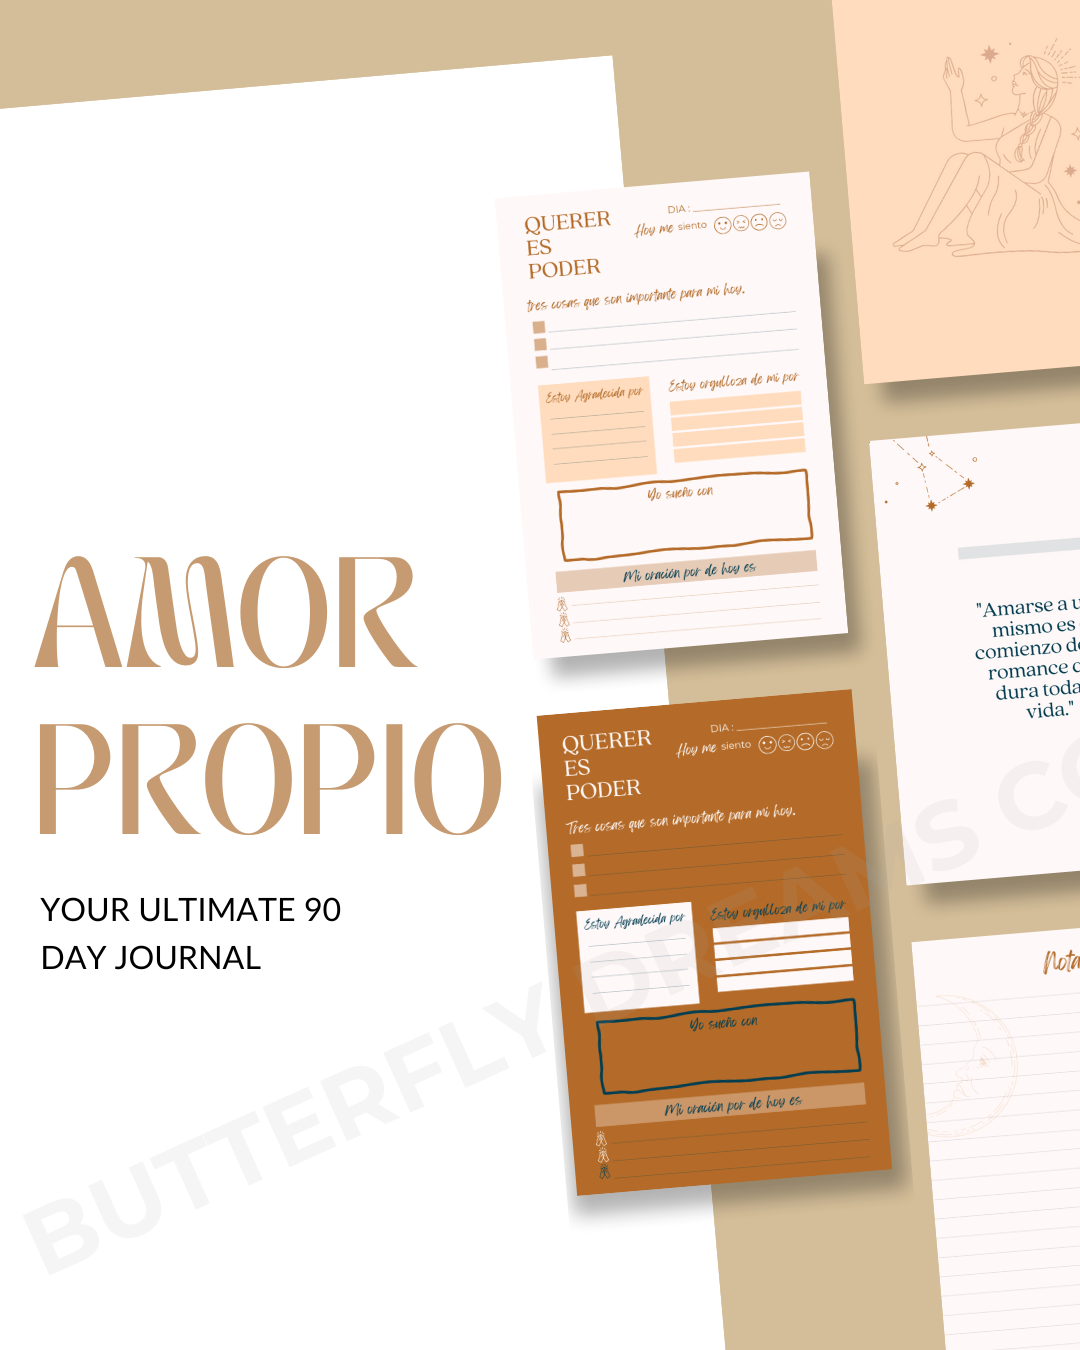 Amor Propio Journal